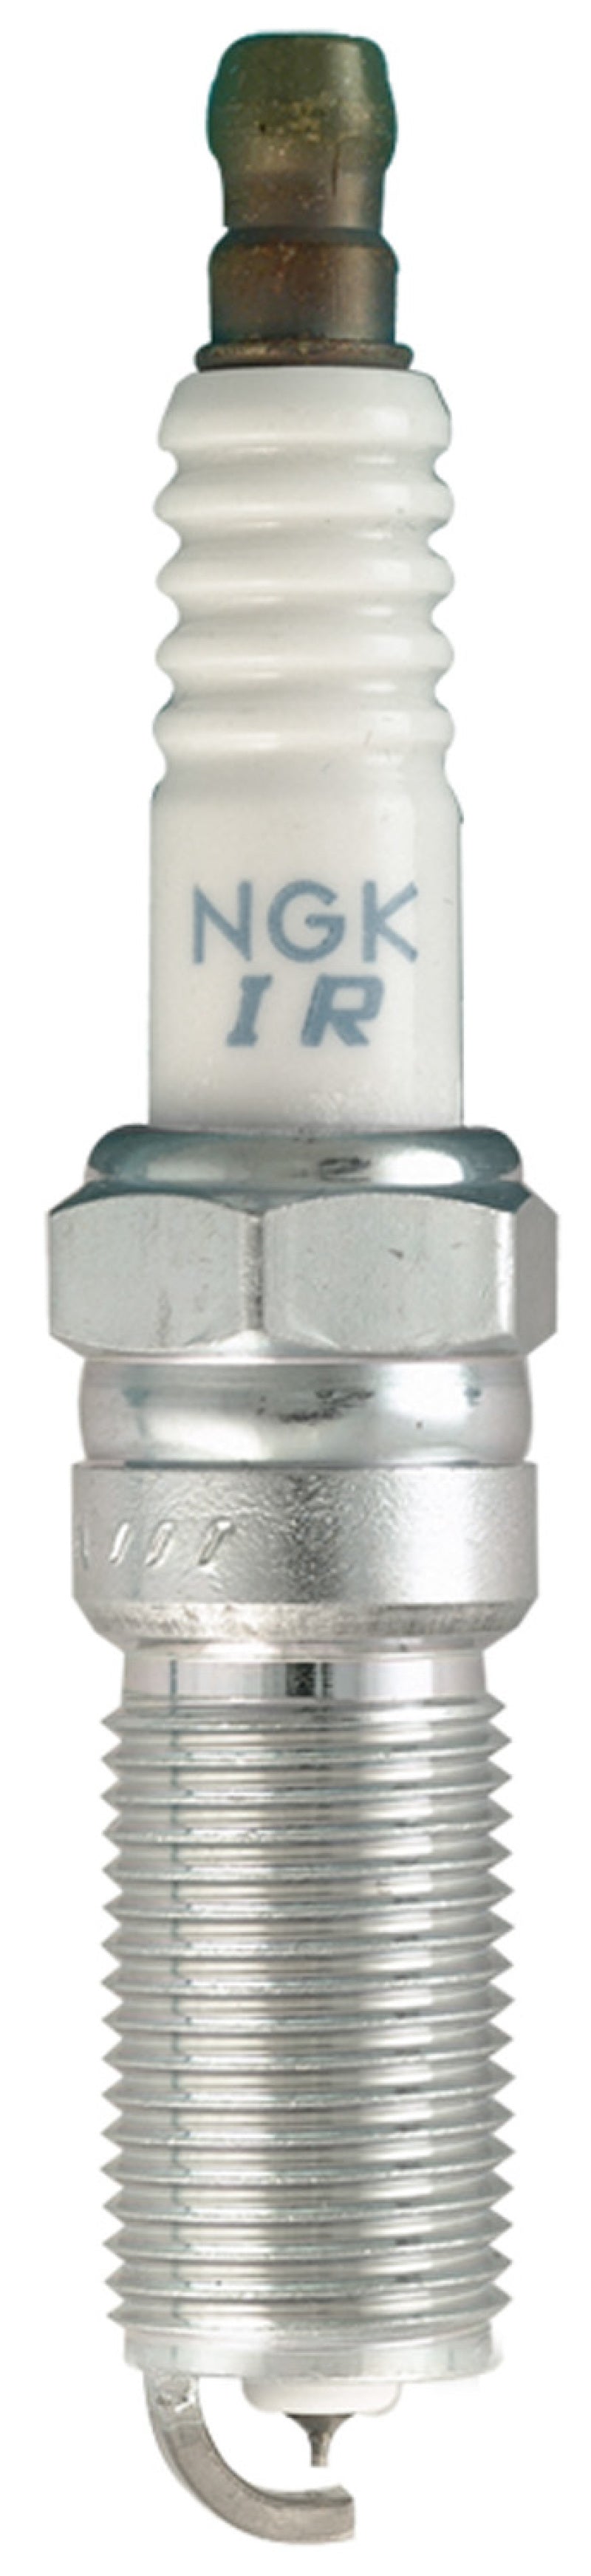 NGK Laser Iridium Spark Plug Box of 4 (ILTR6M9G)